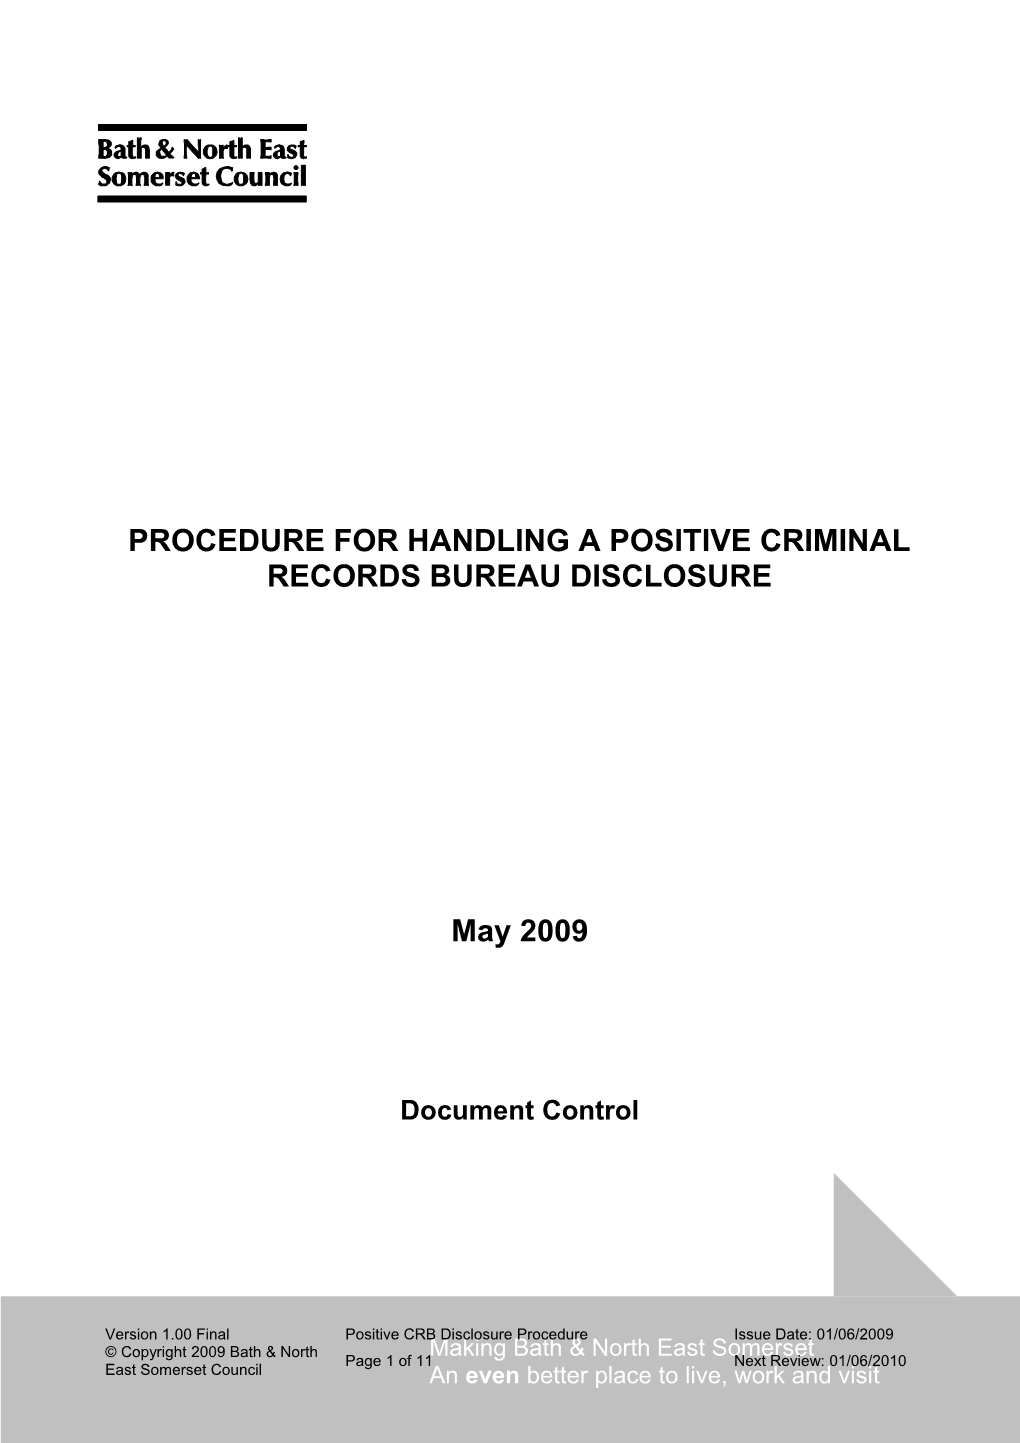 Procedure for Handling a Positive Criminal Records Bureau Disclosure